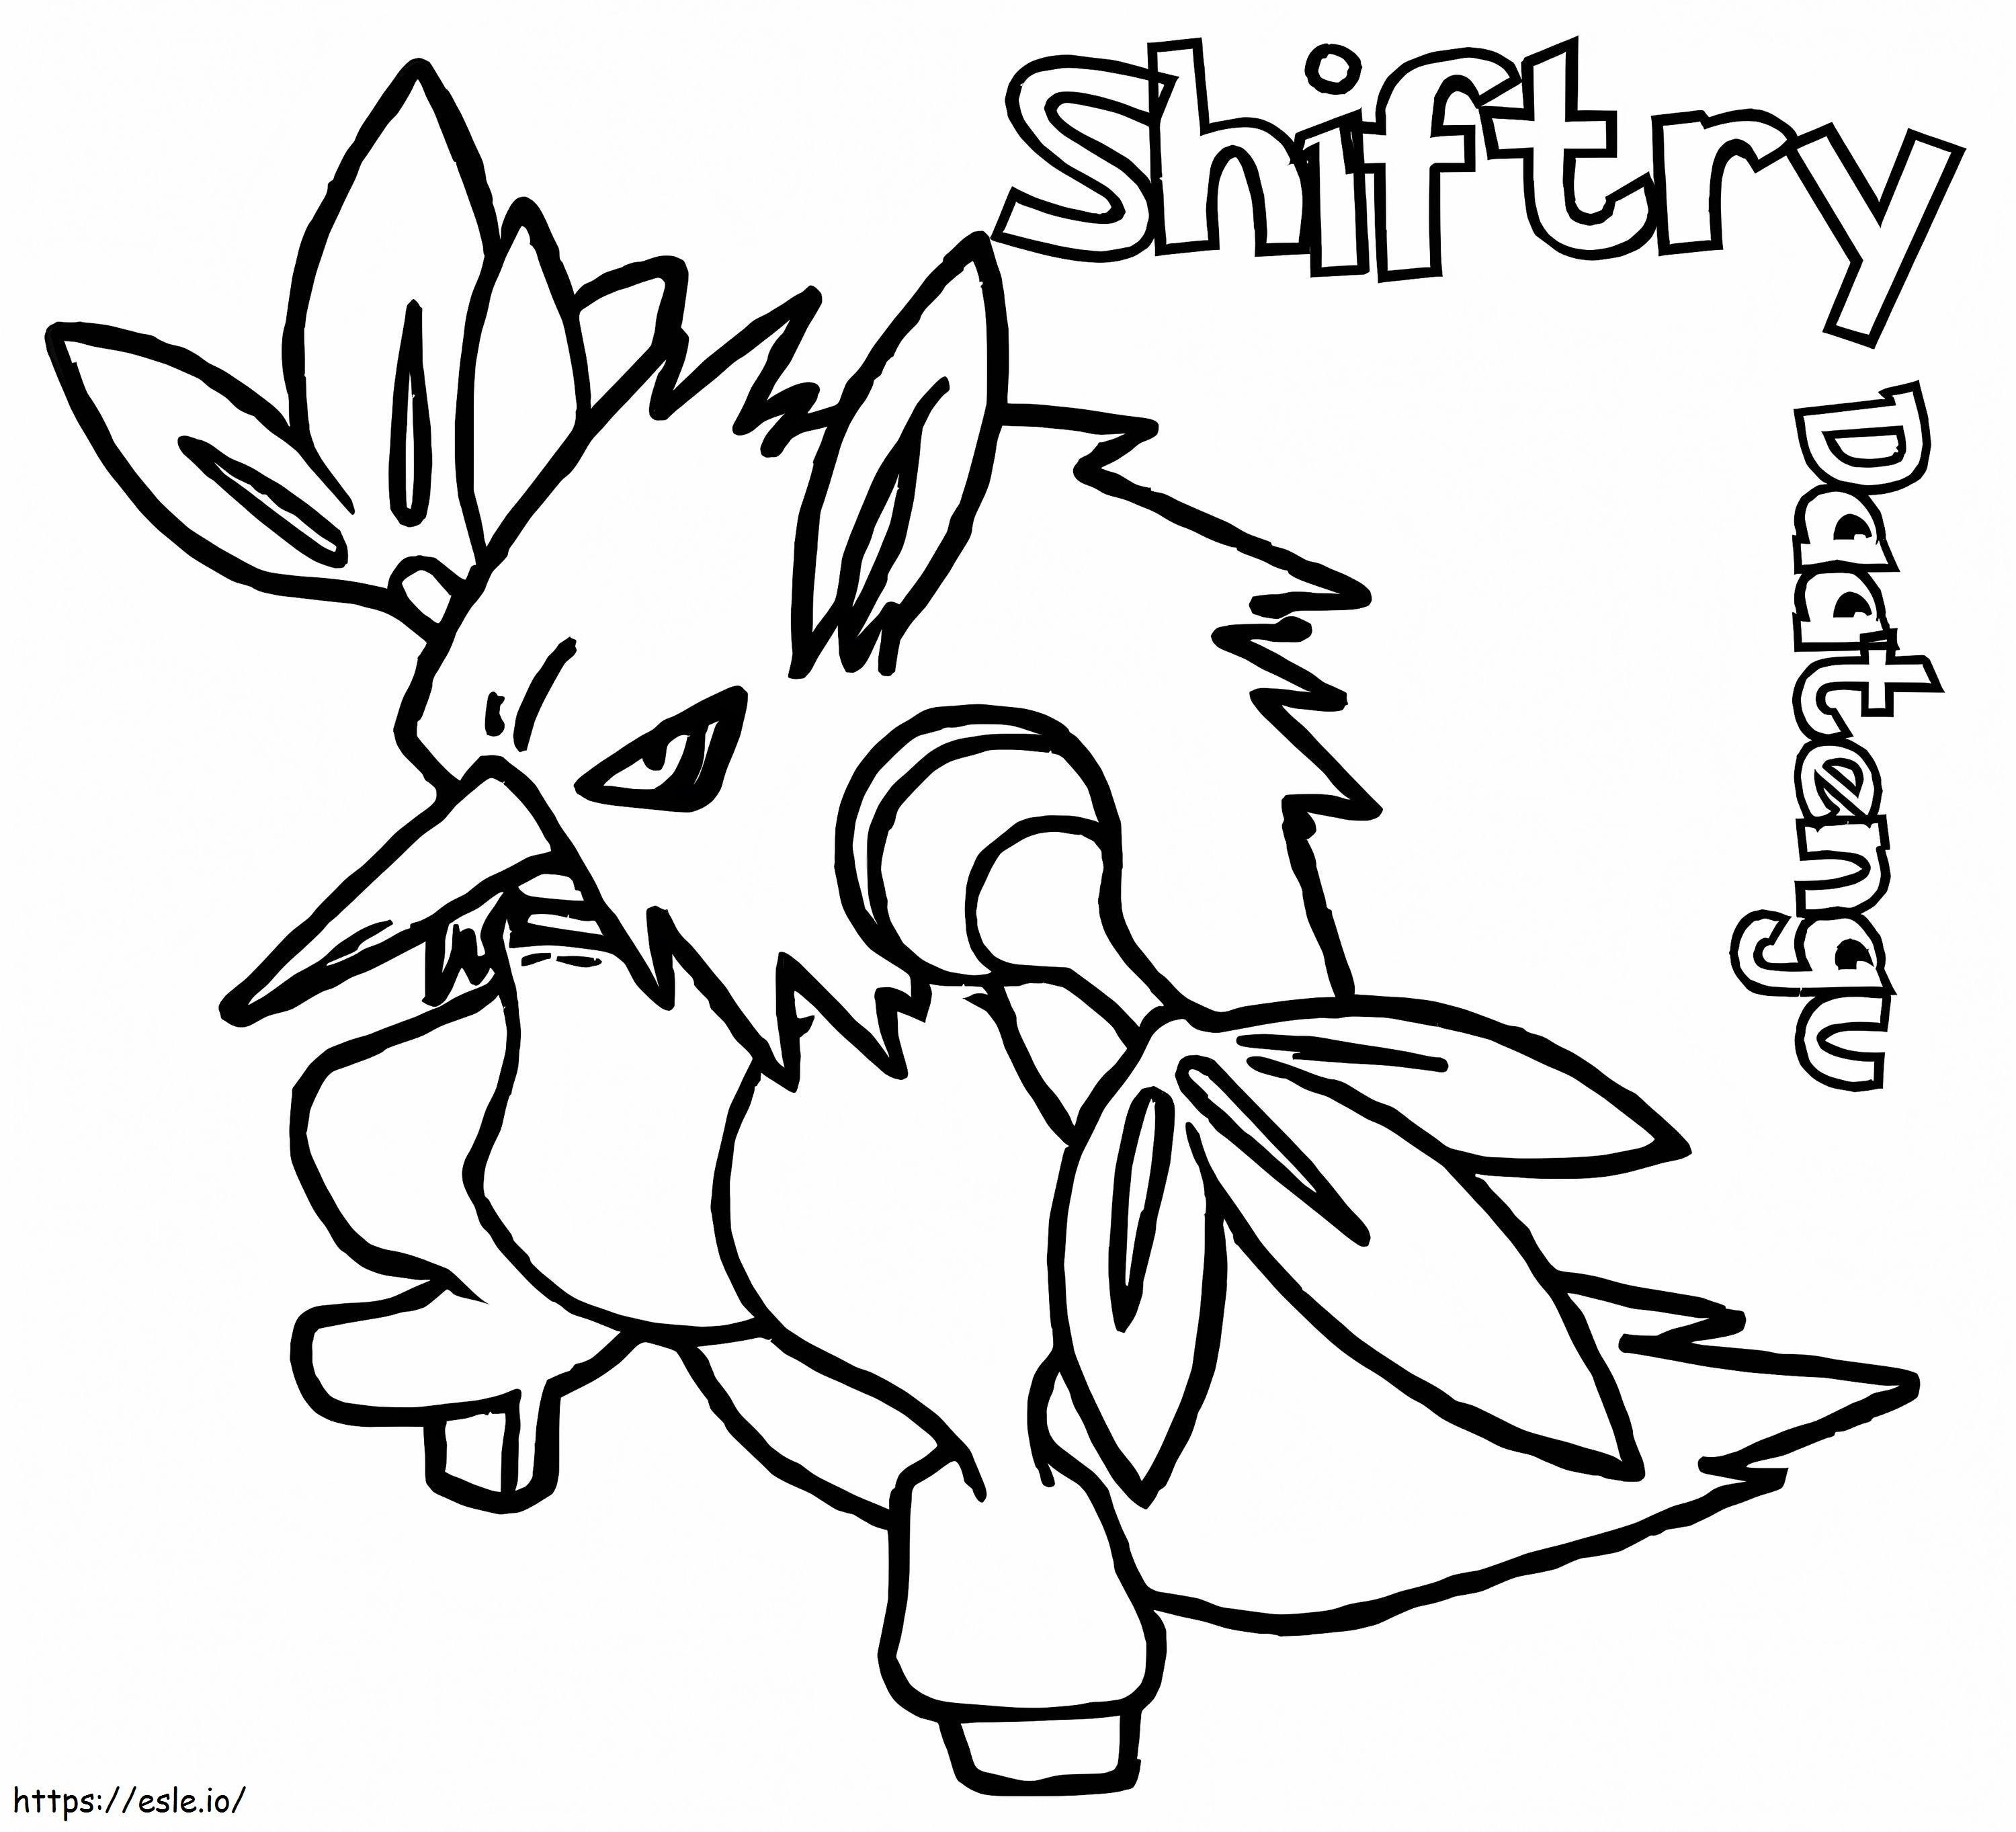 Druckbares Shiftry-Pokémon ausmalbilder